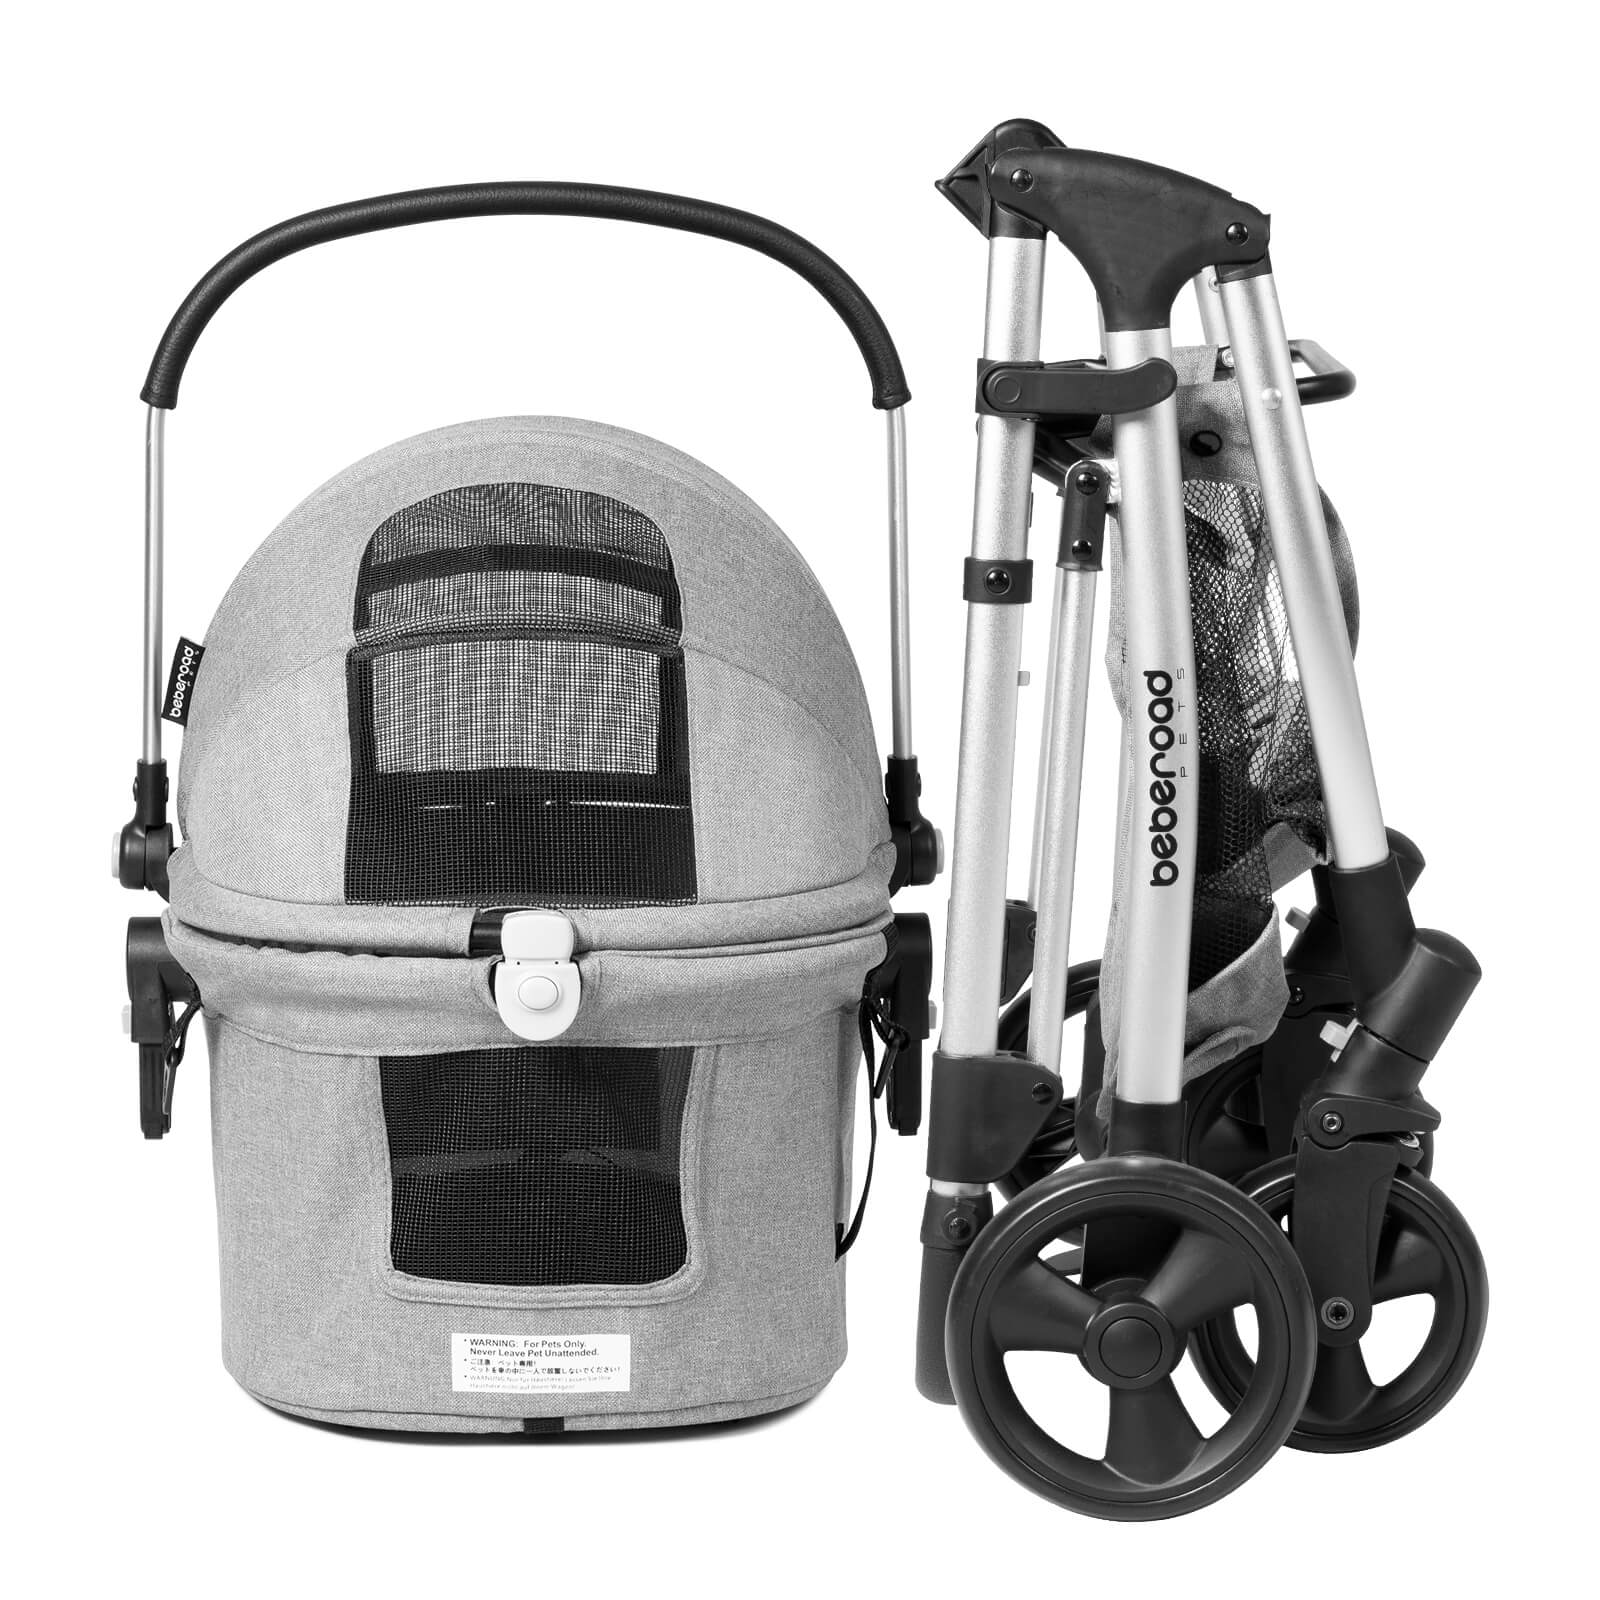 R5 Pet Stroller